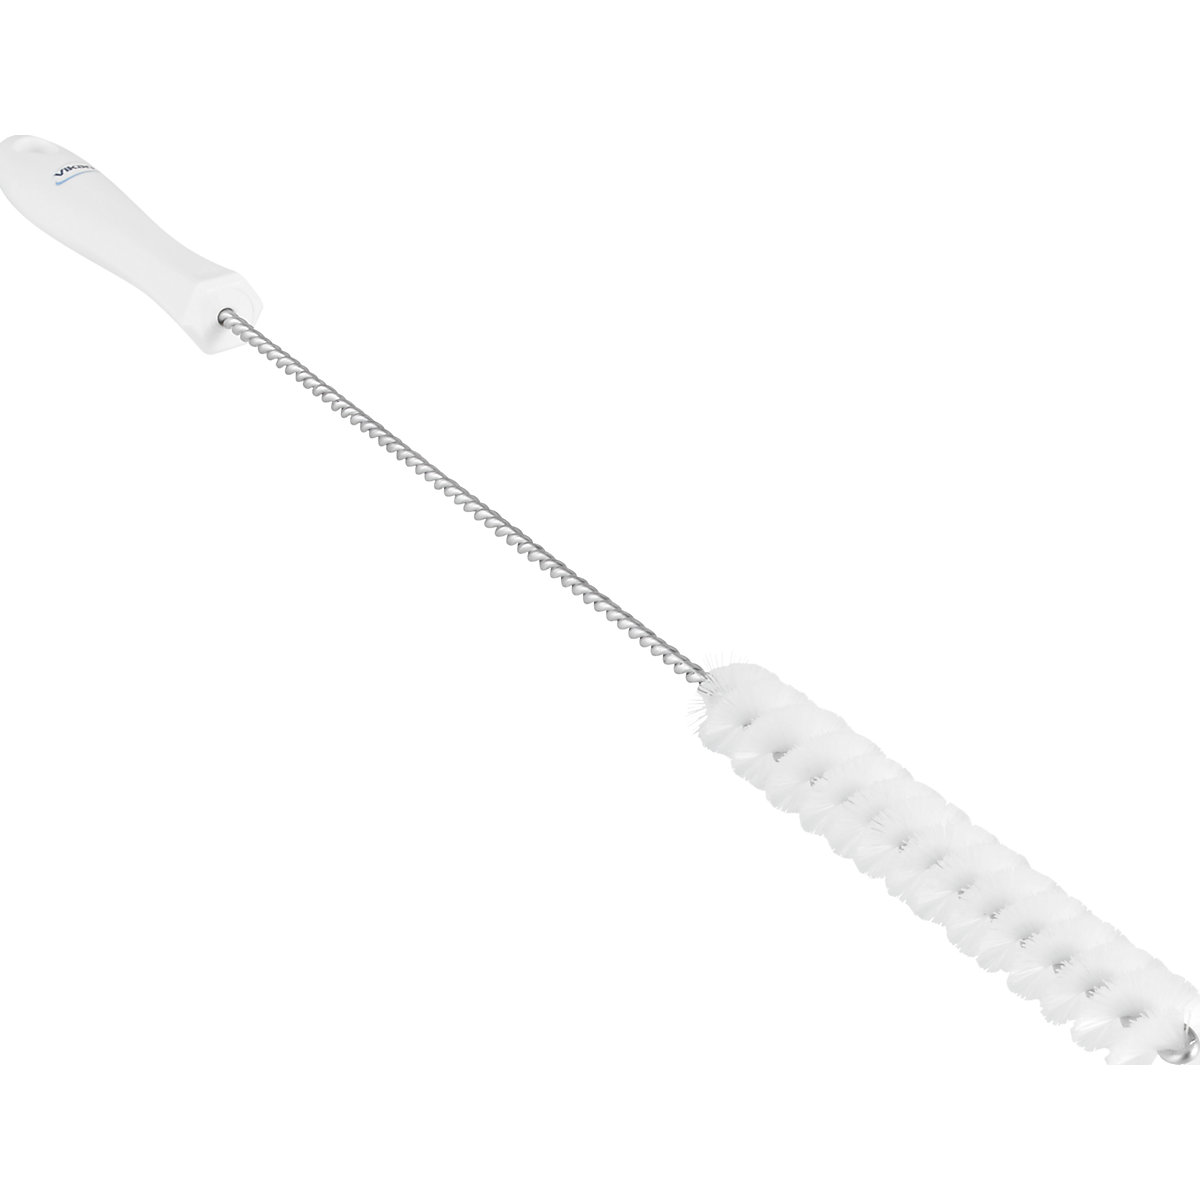 Brosse tubulaire avec manche – Vikan, moyen, Ø 20 mm, lot de 15, blanc-6